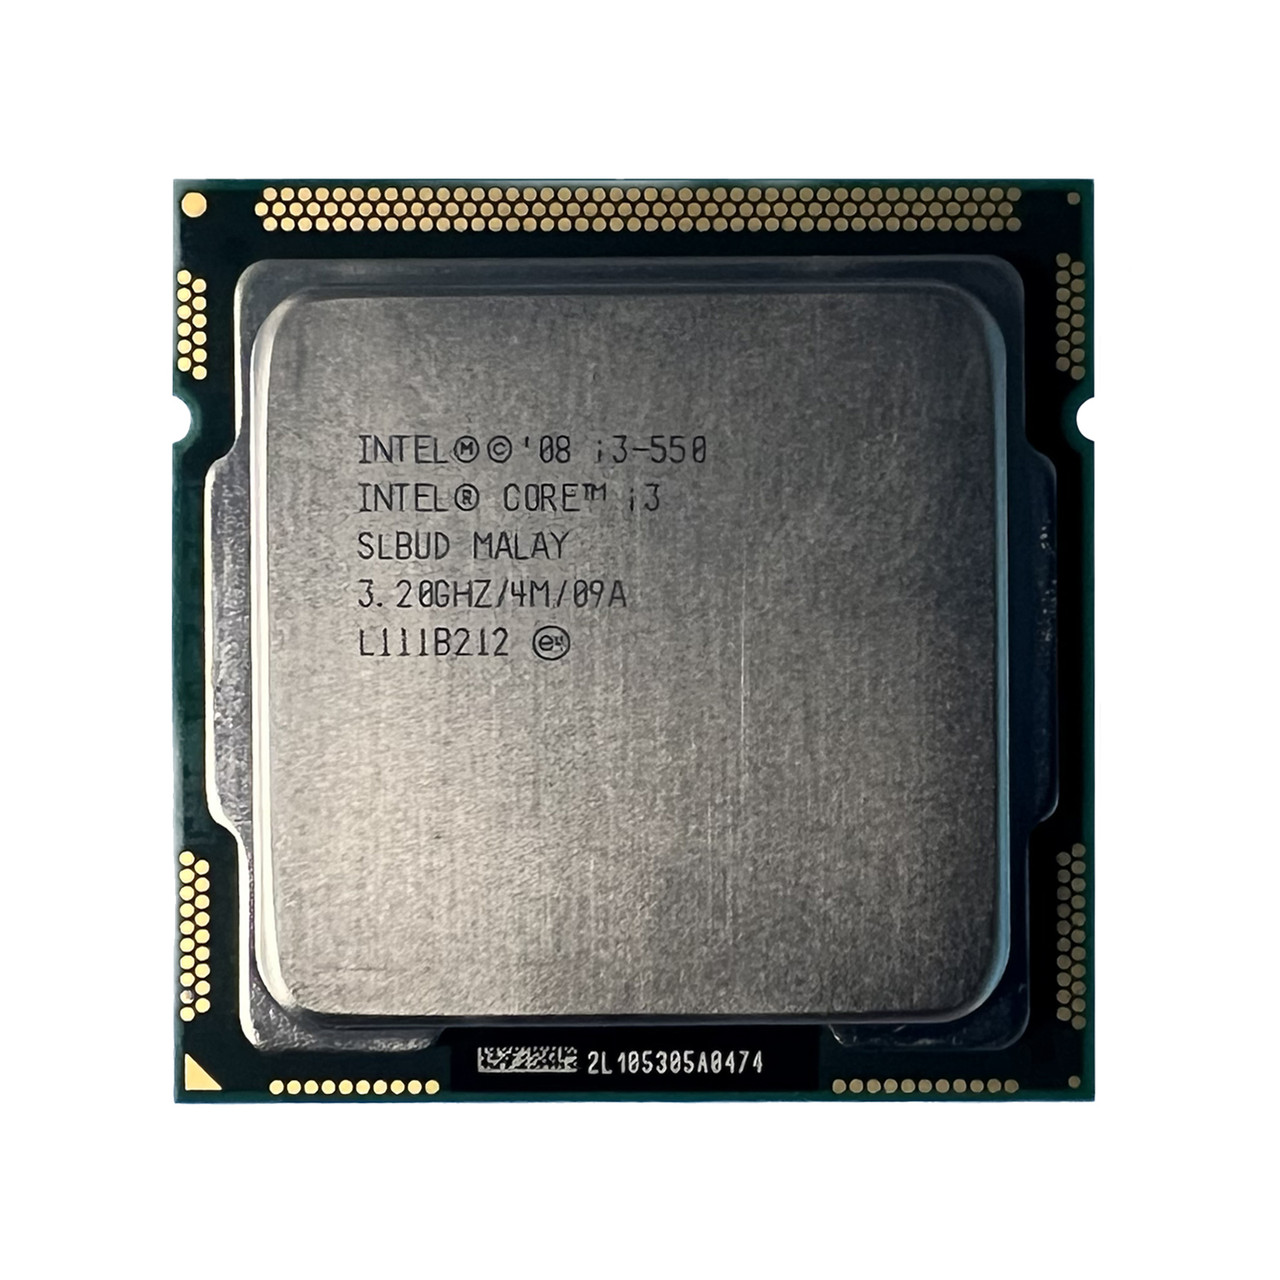 Intel SLBUD i3-550 DC 3.20Ghz 4MB 2.5GTs Processor